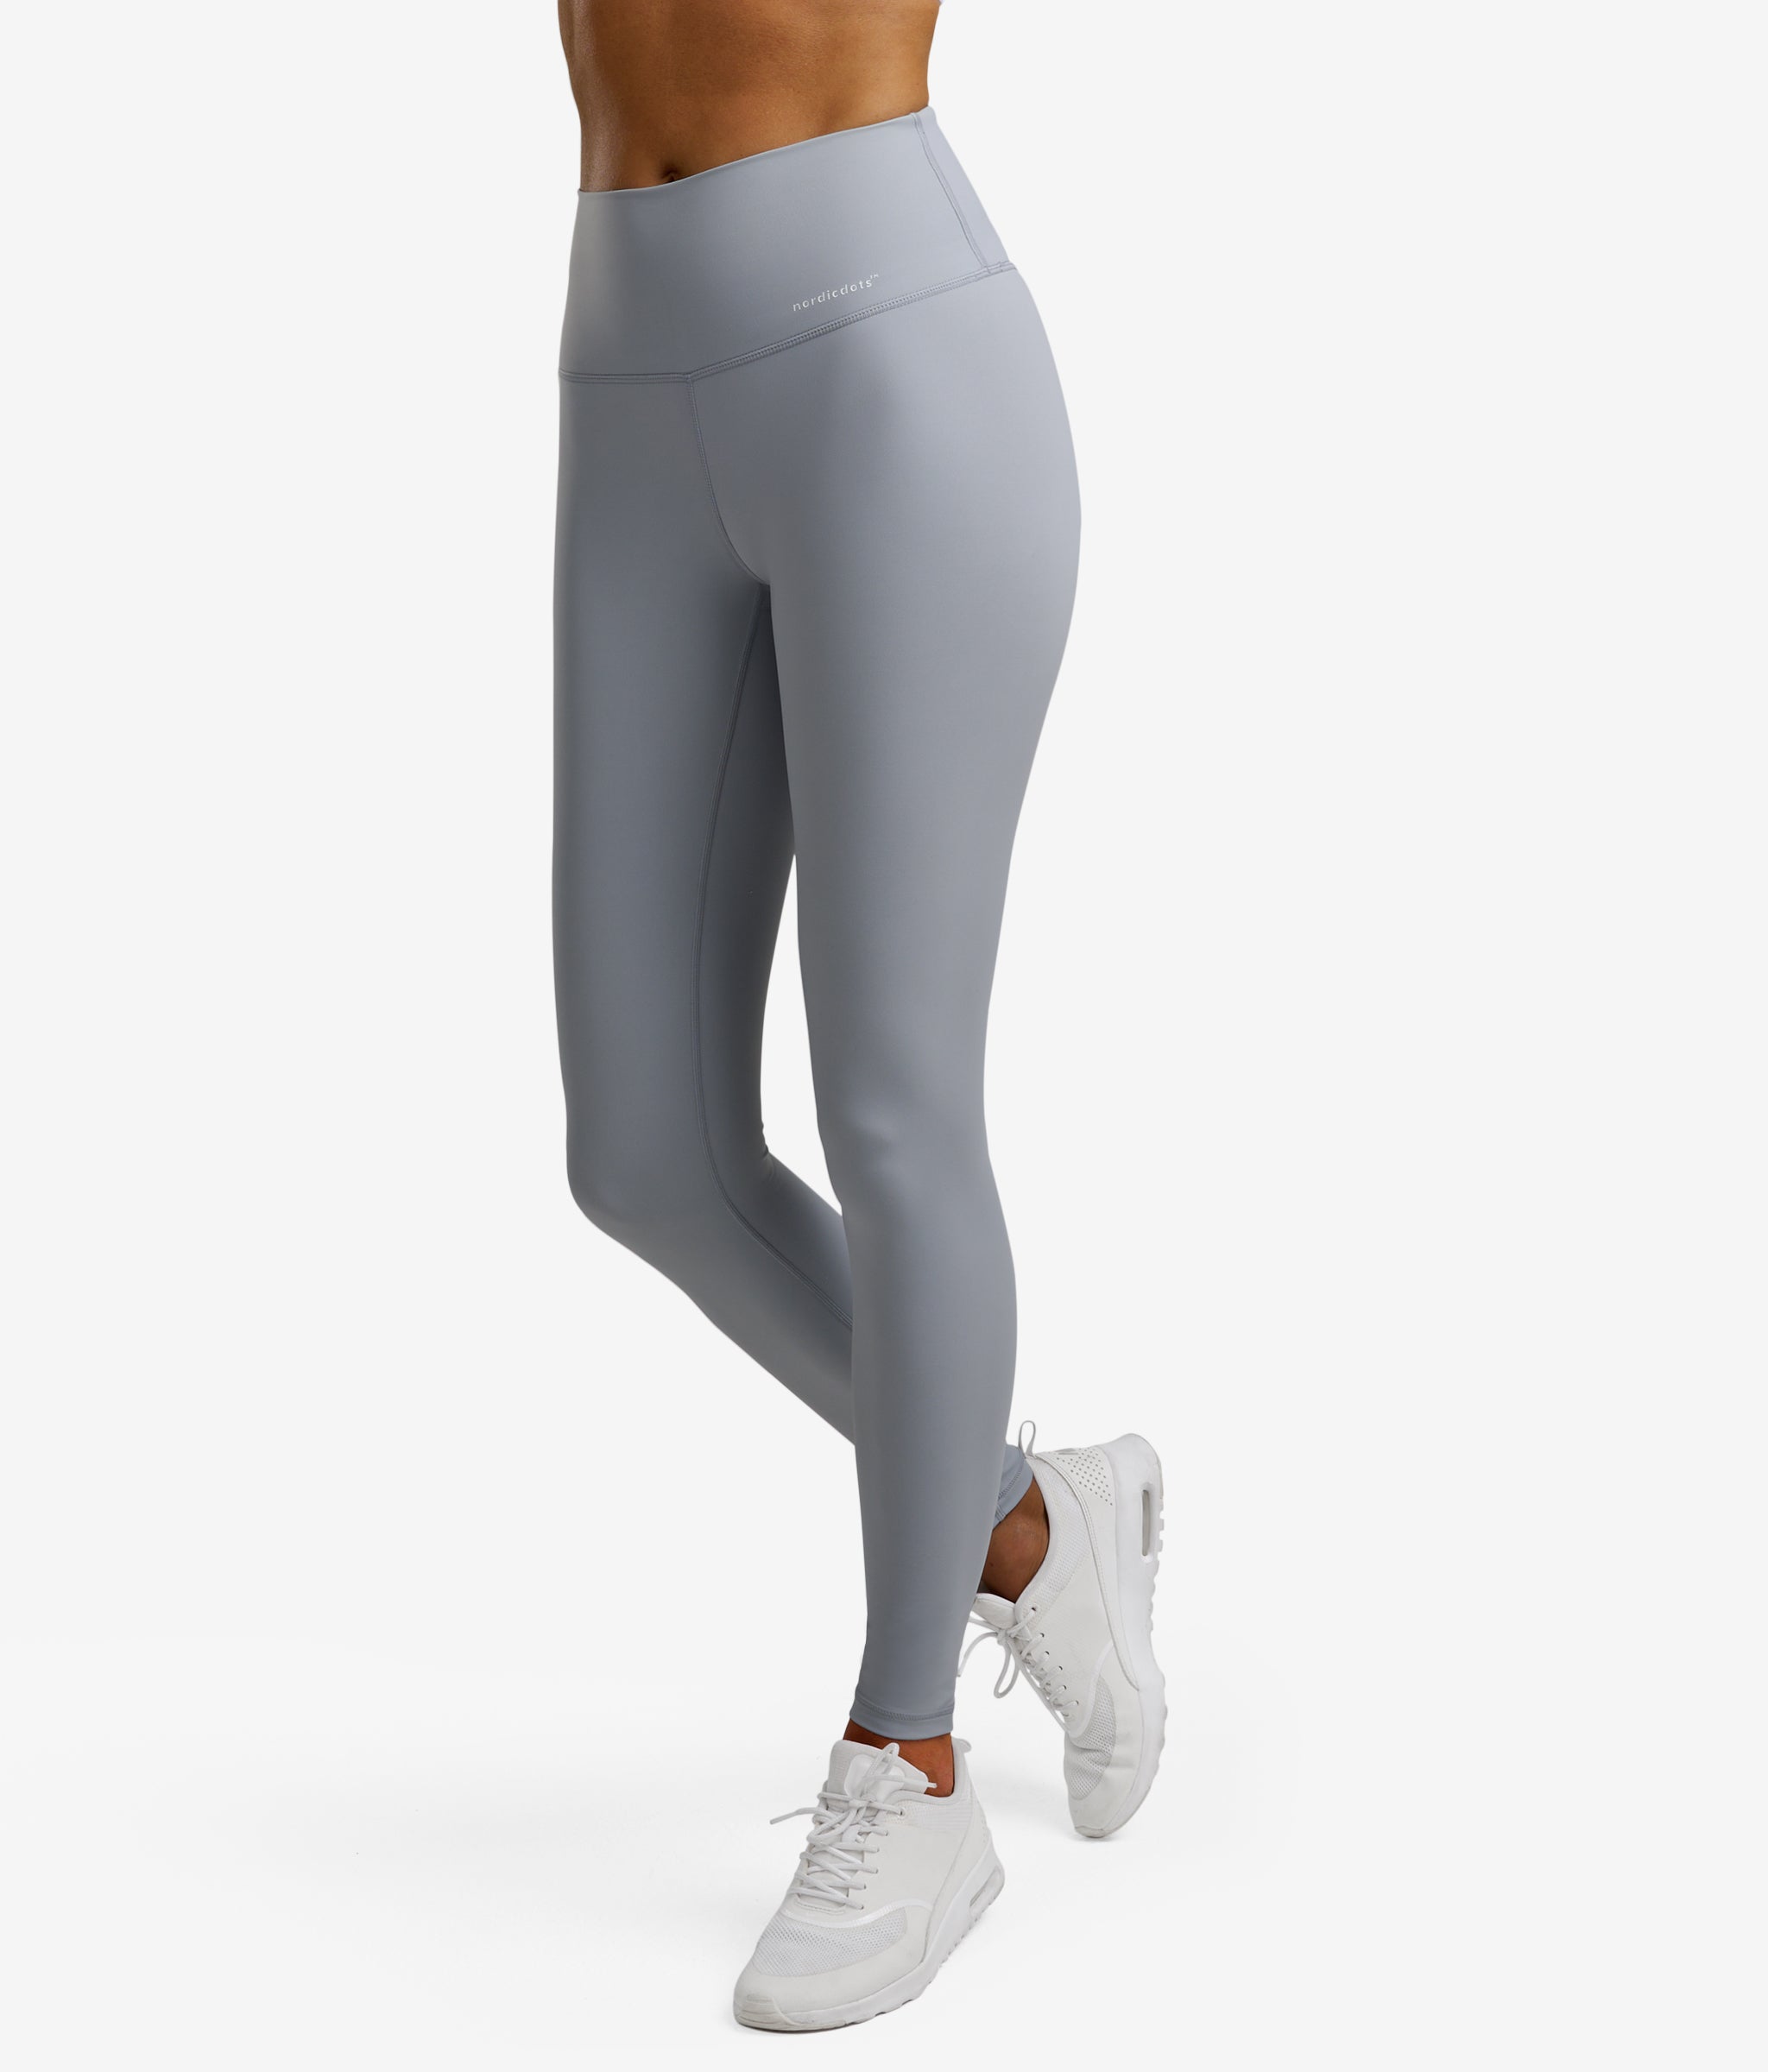 Be AYBL Fitness Yoga Leggings Seamless Grey Colour Size S Fabletics T Shirt  Long | eBay